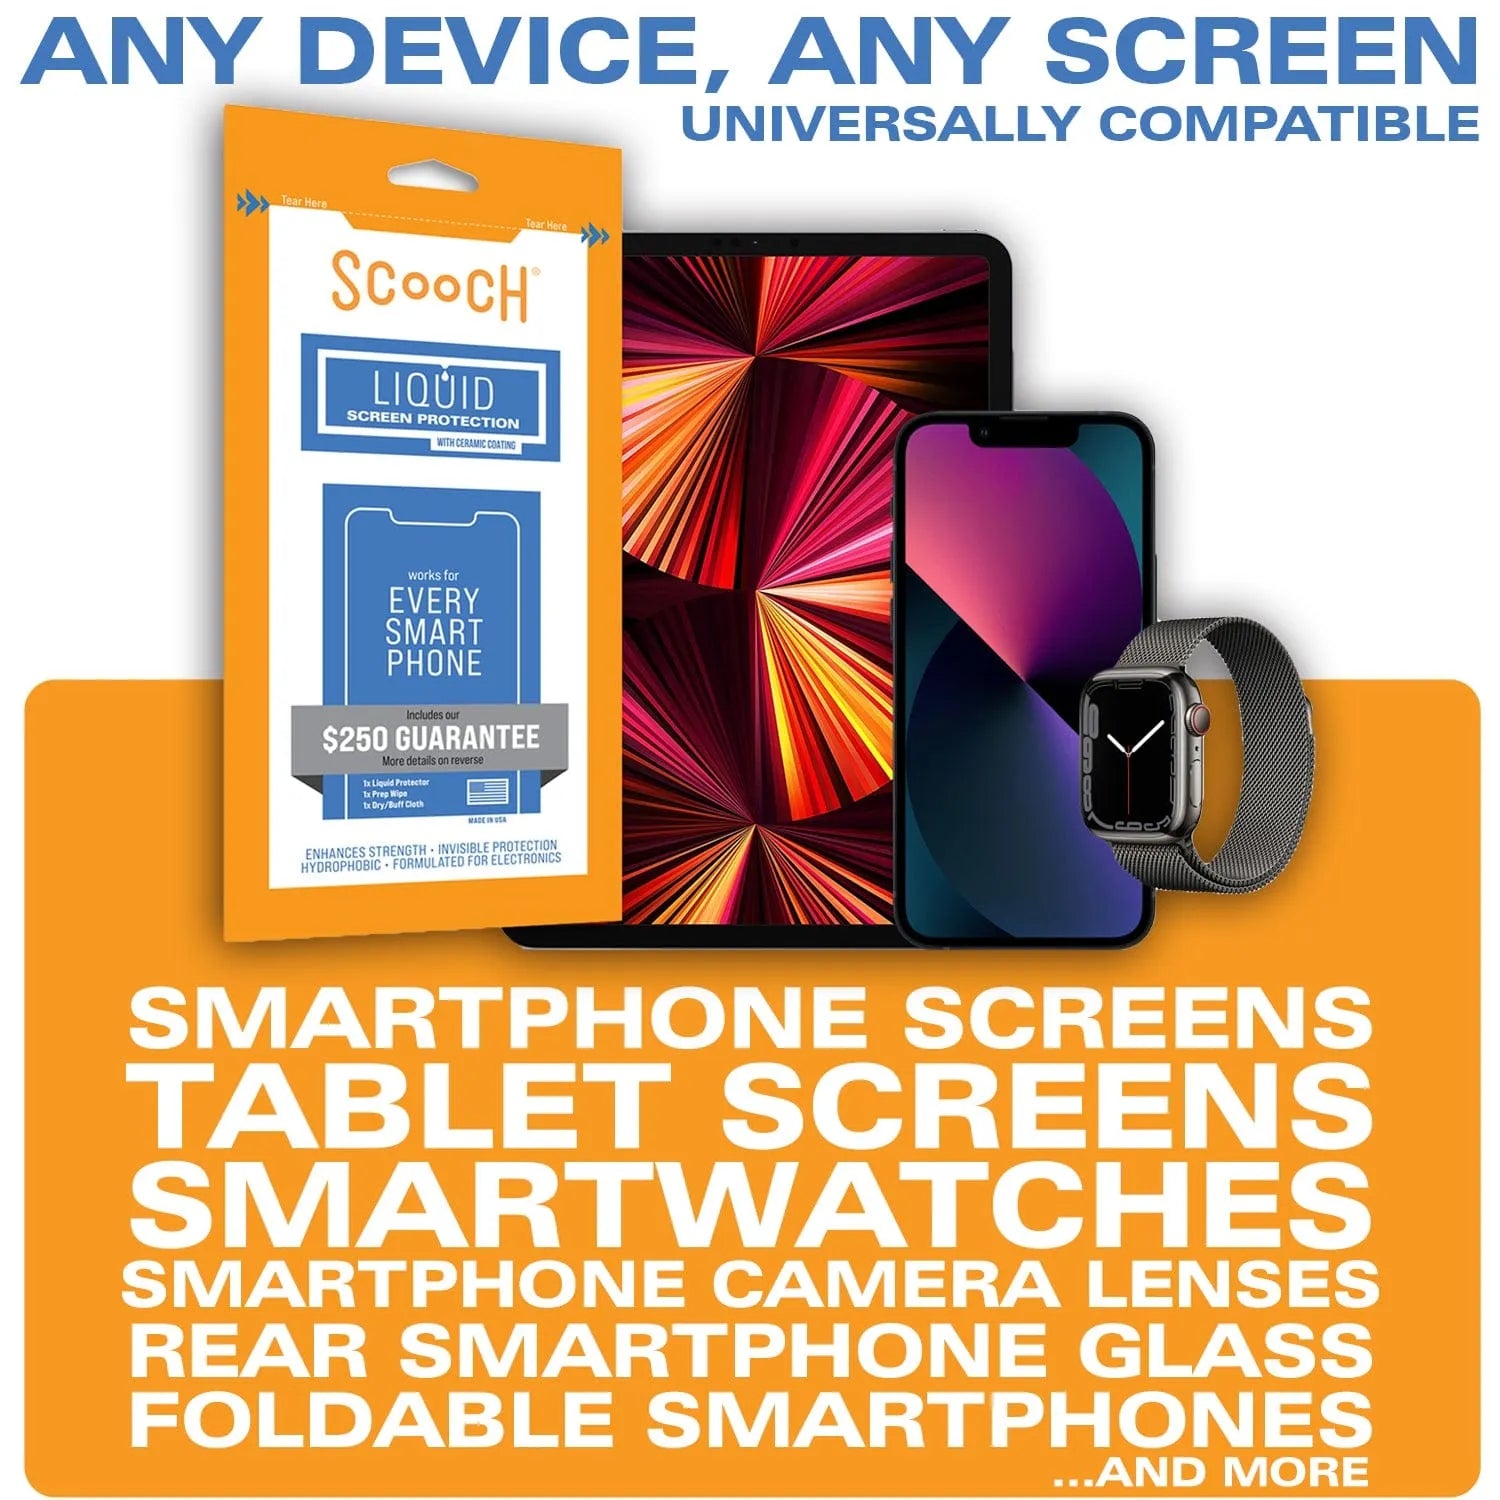 Scooch Liquid Screen Protector - $250 Protection  Scooch Screen Protector